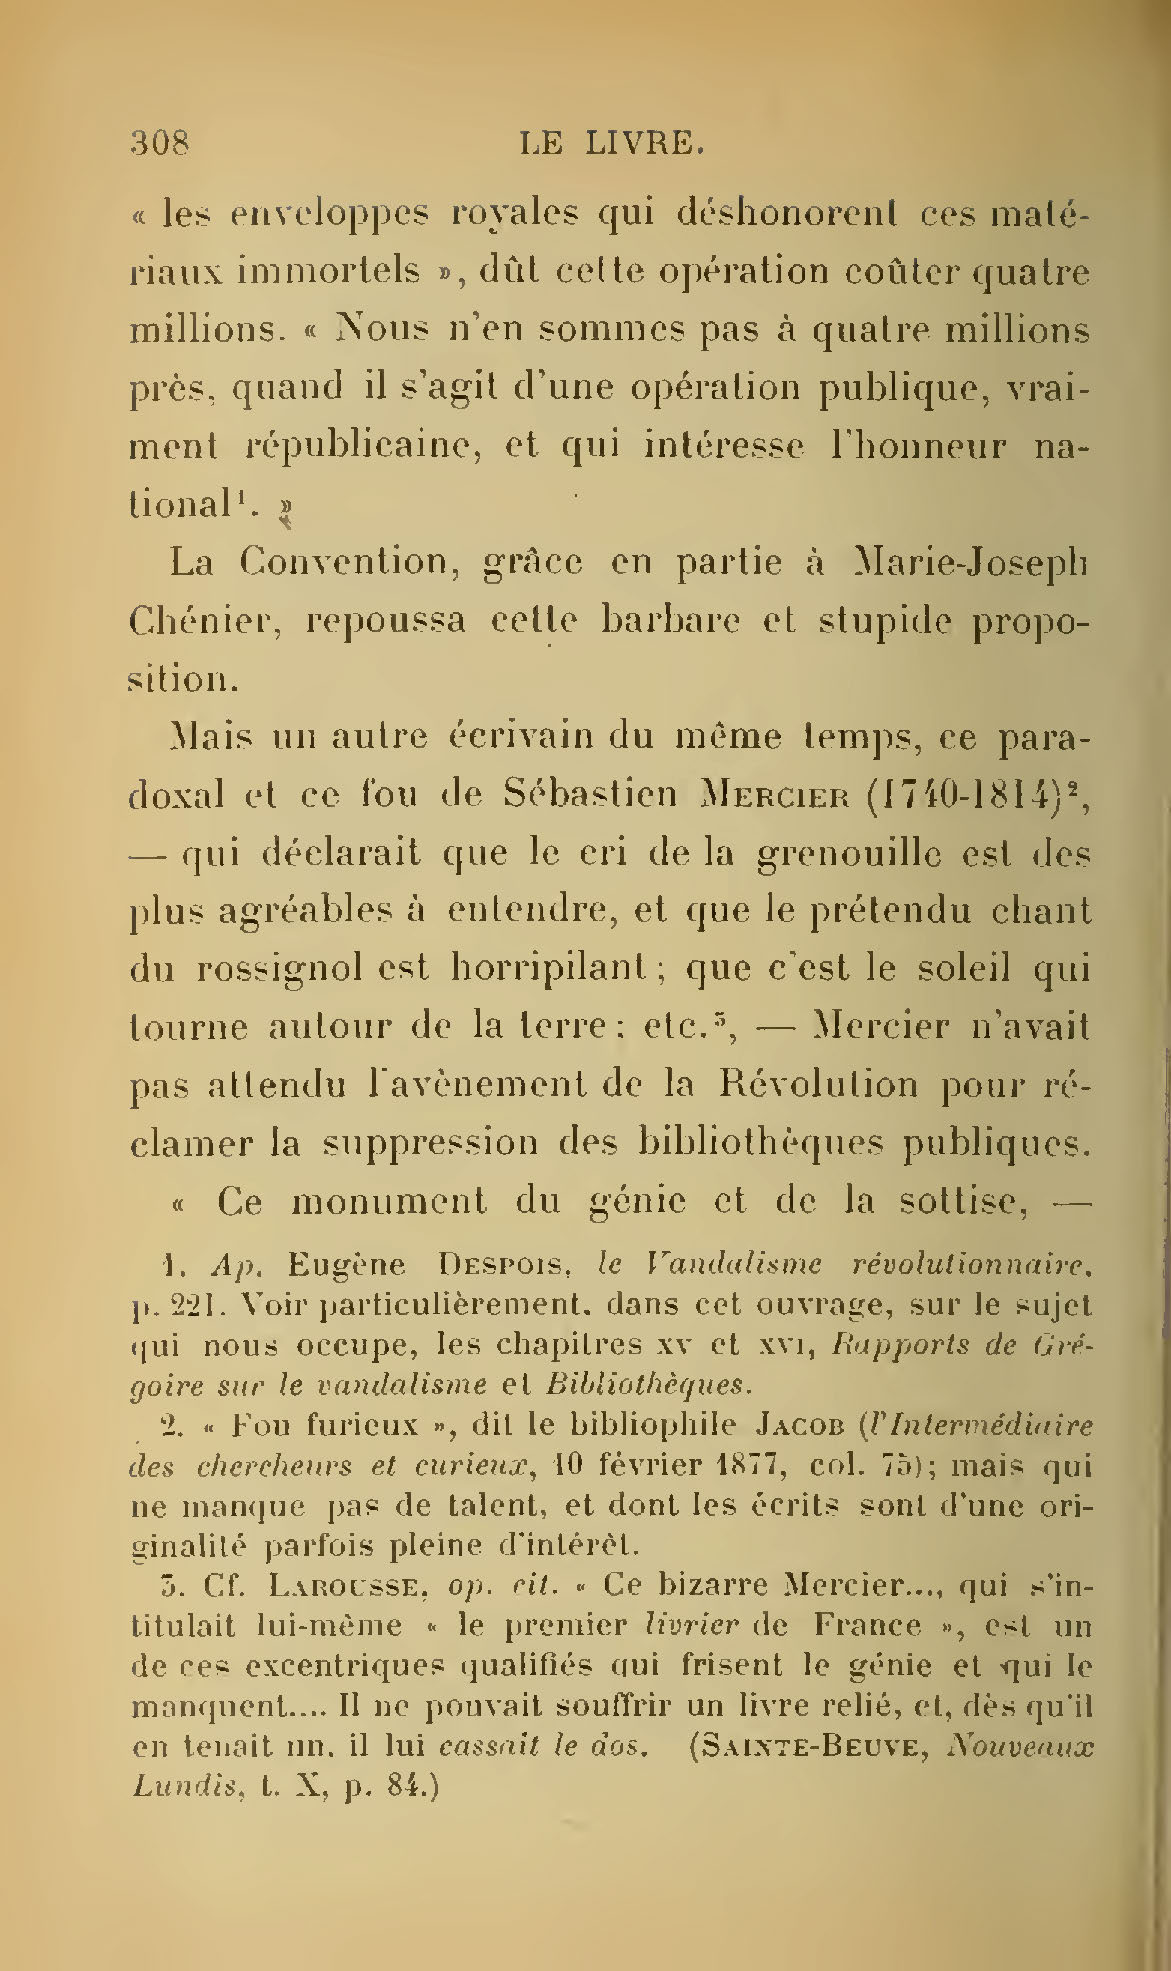 Albert Cim, Le Livre, t. II, p. 308.